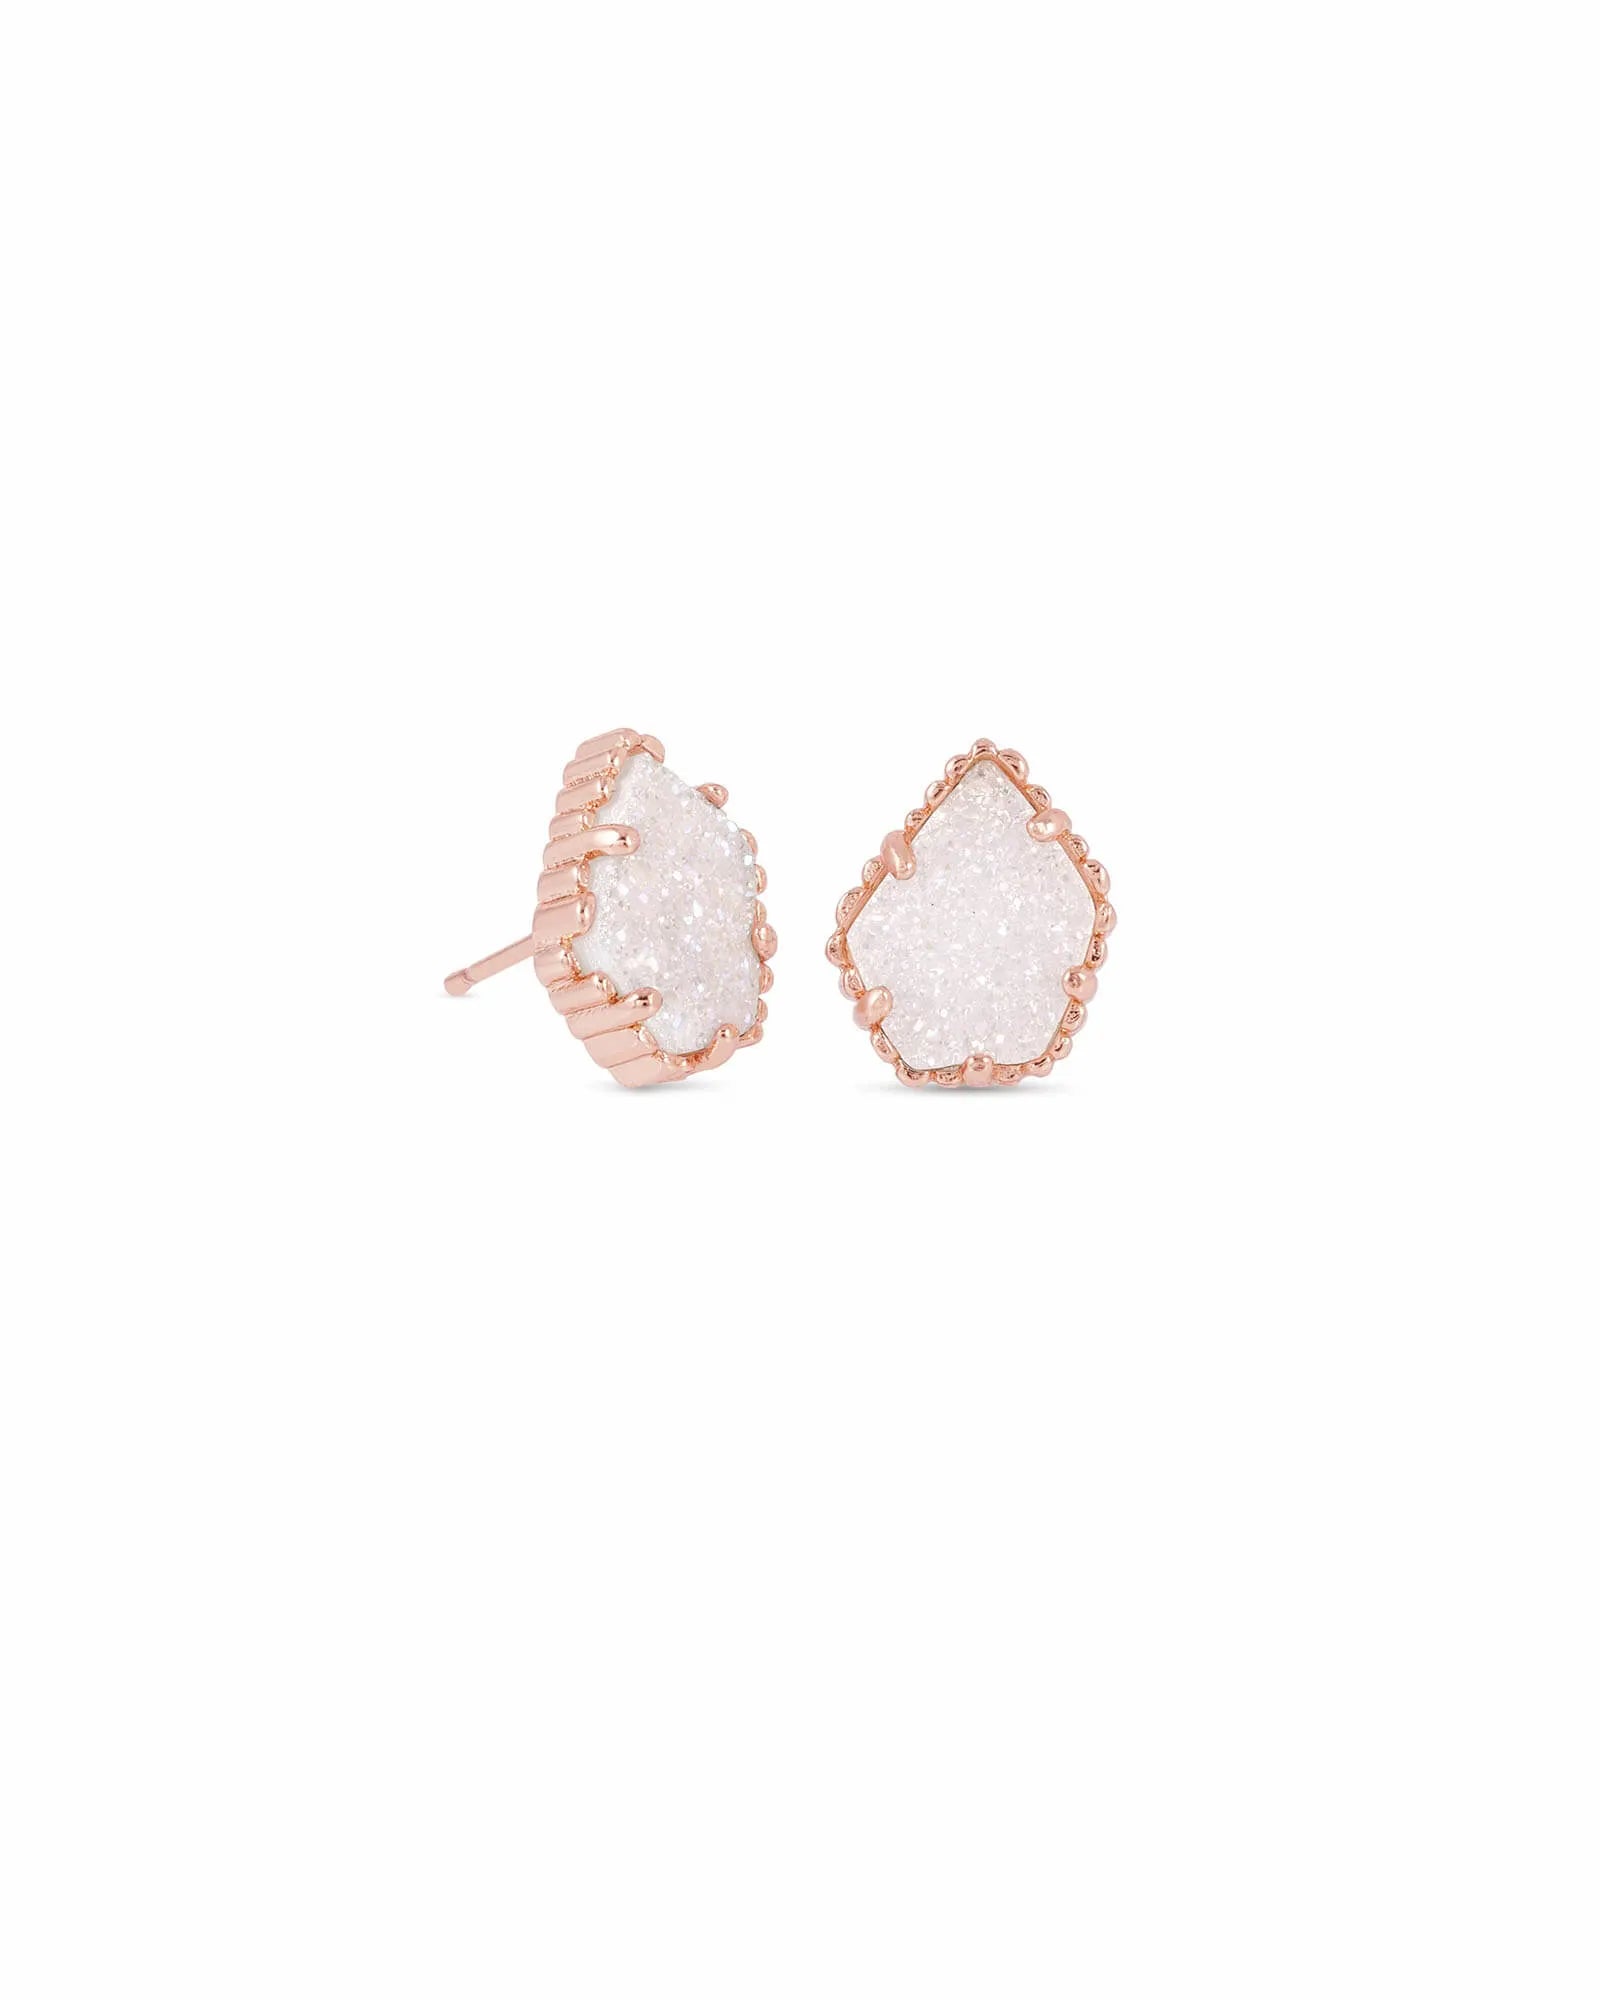 KENDRA SCOTT- Tessa Rose Gold Stud Earrings in Iridescent Drusy